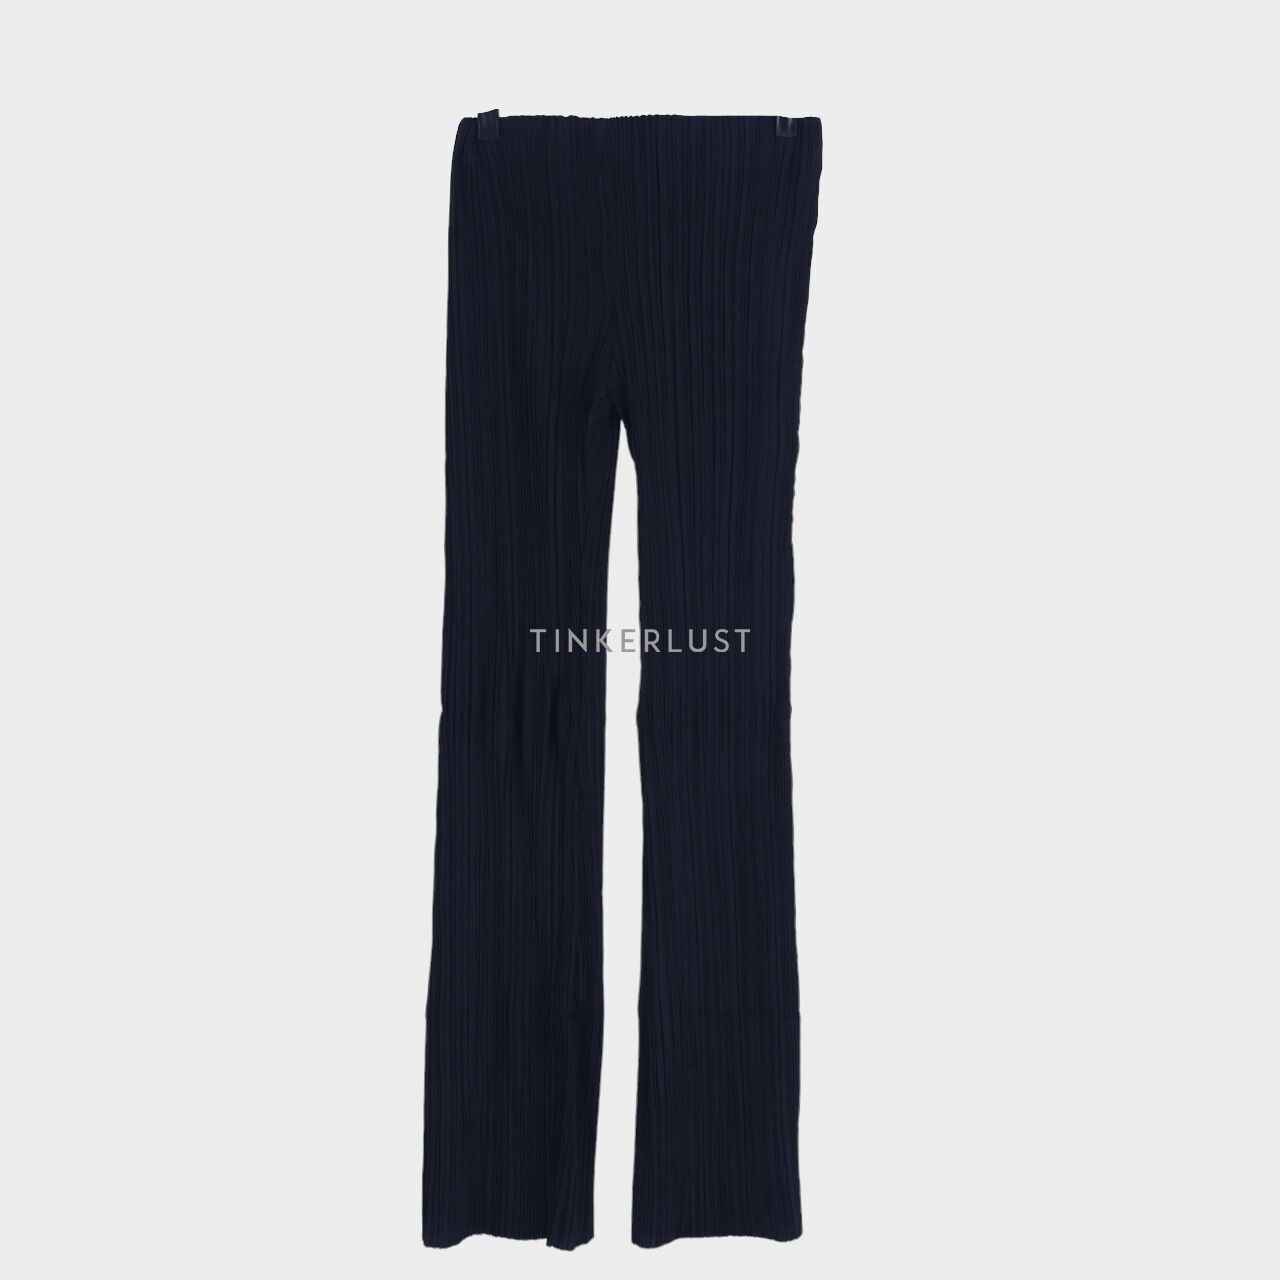 H&M Black Pleated Long Pants